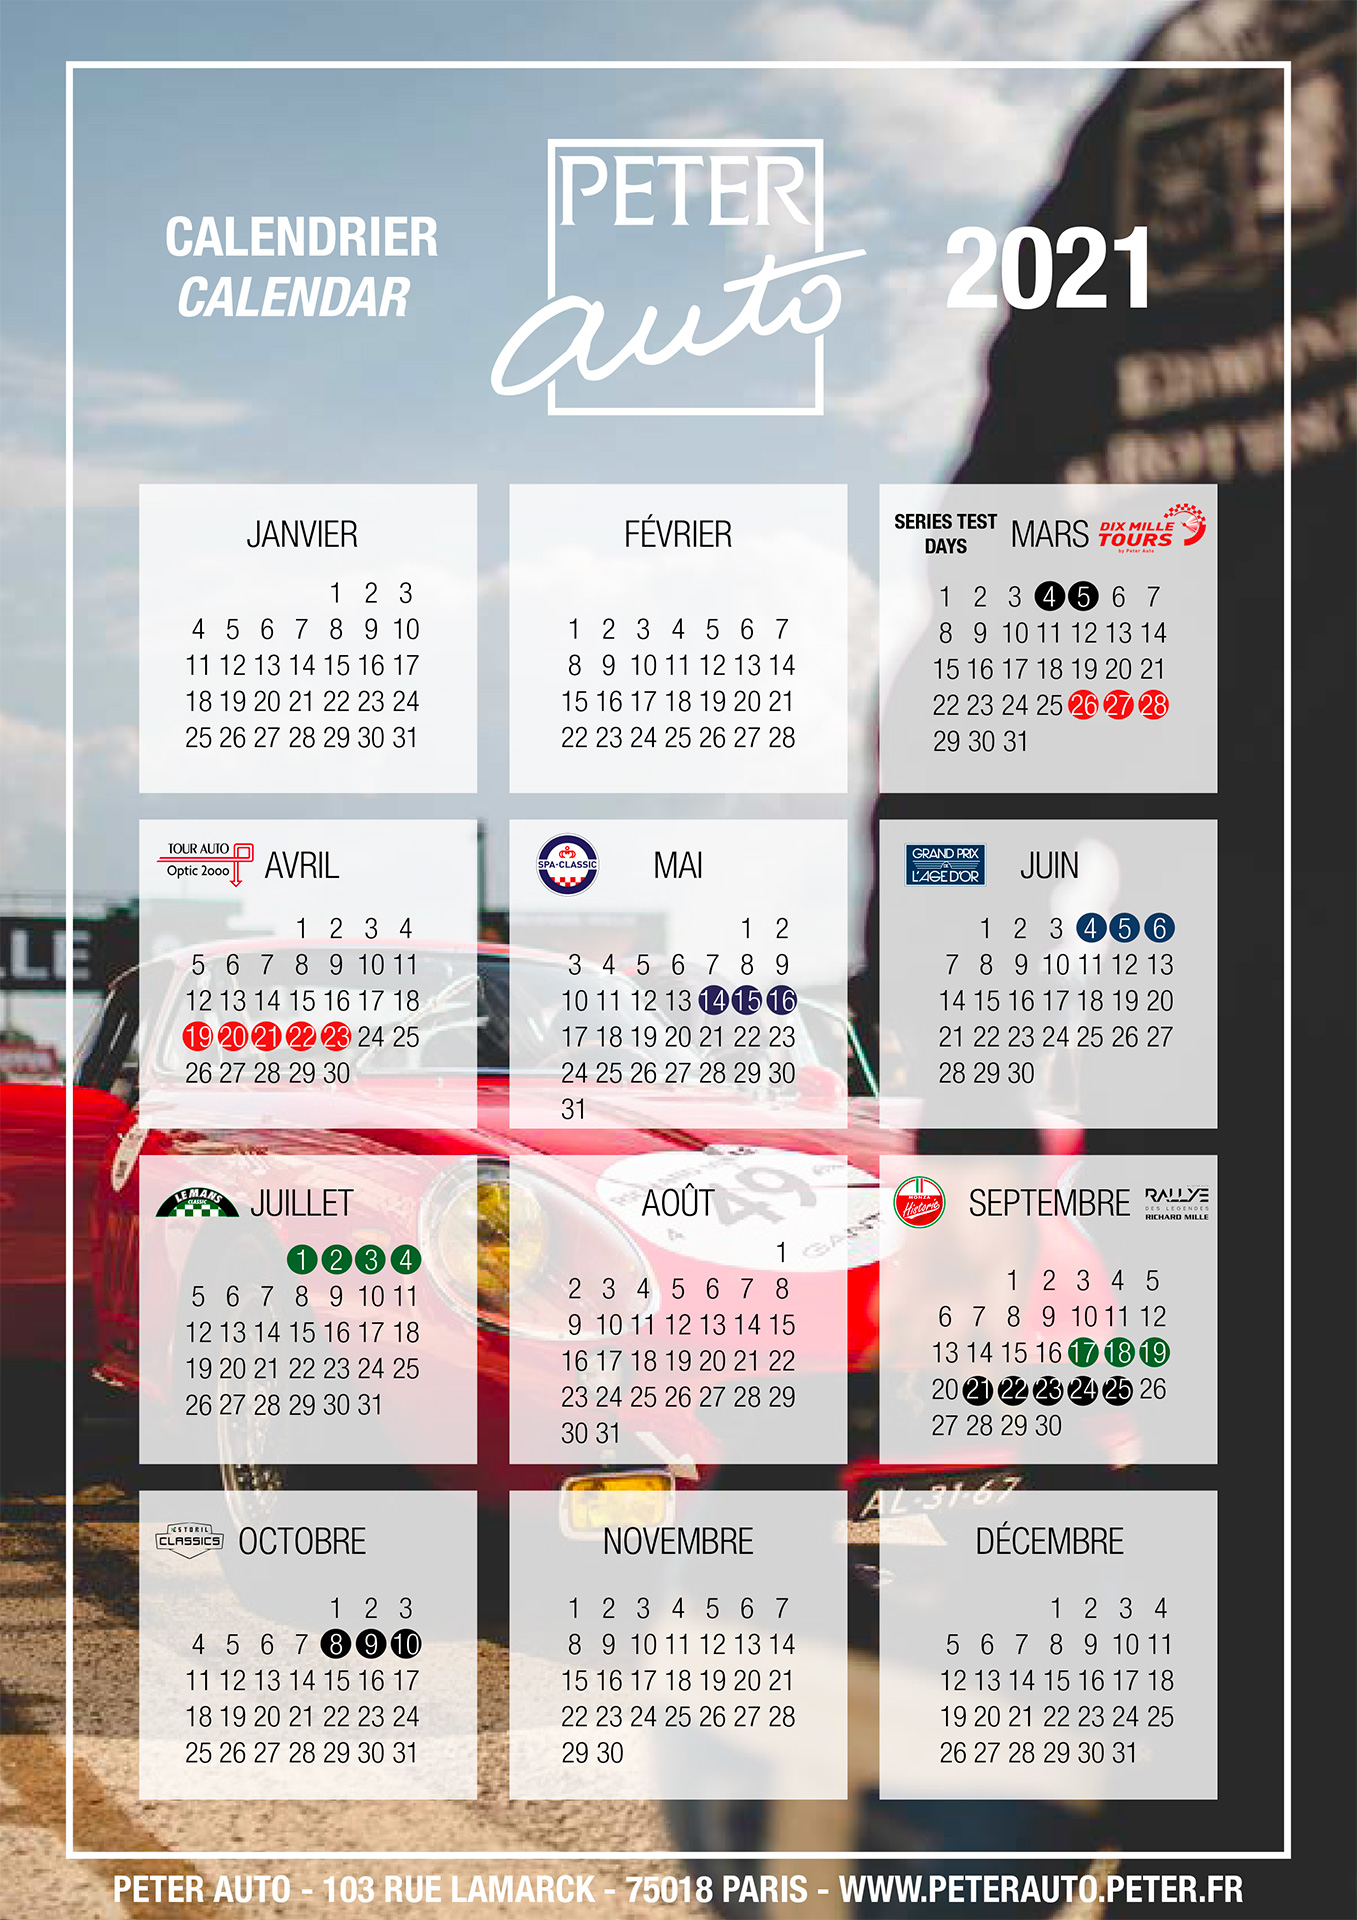 2021 peter auto calendar